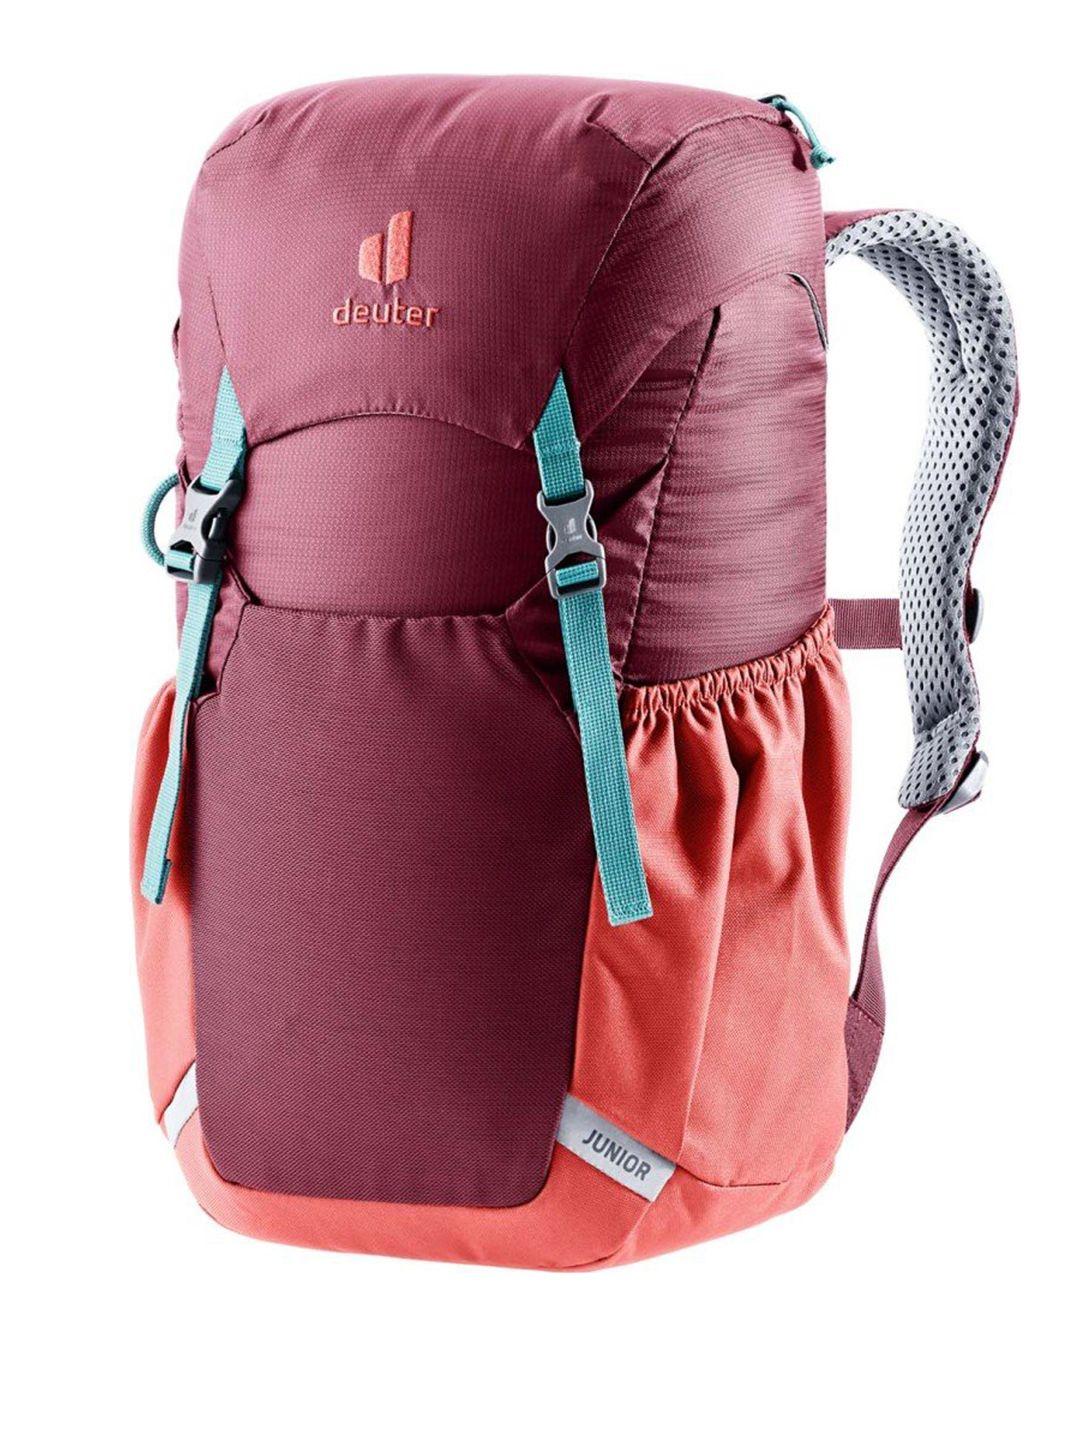 deuter unisex colourblocked backpack